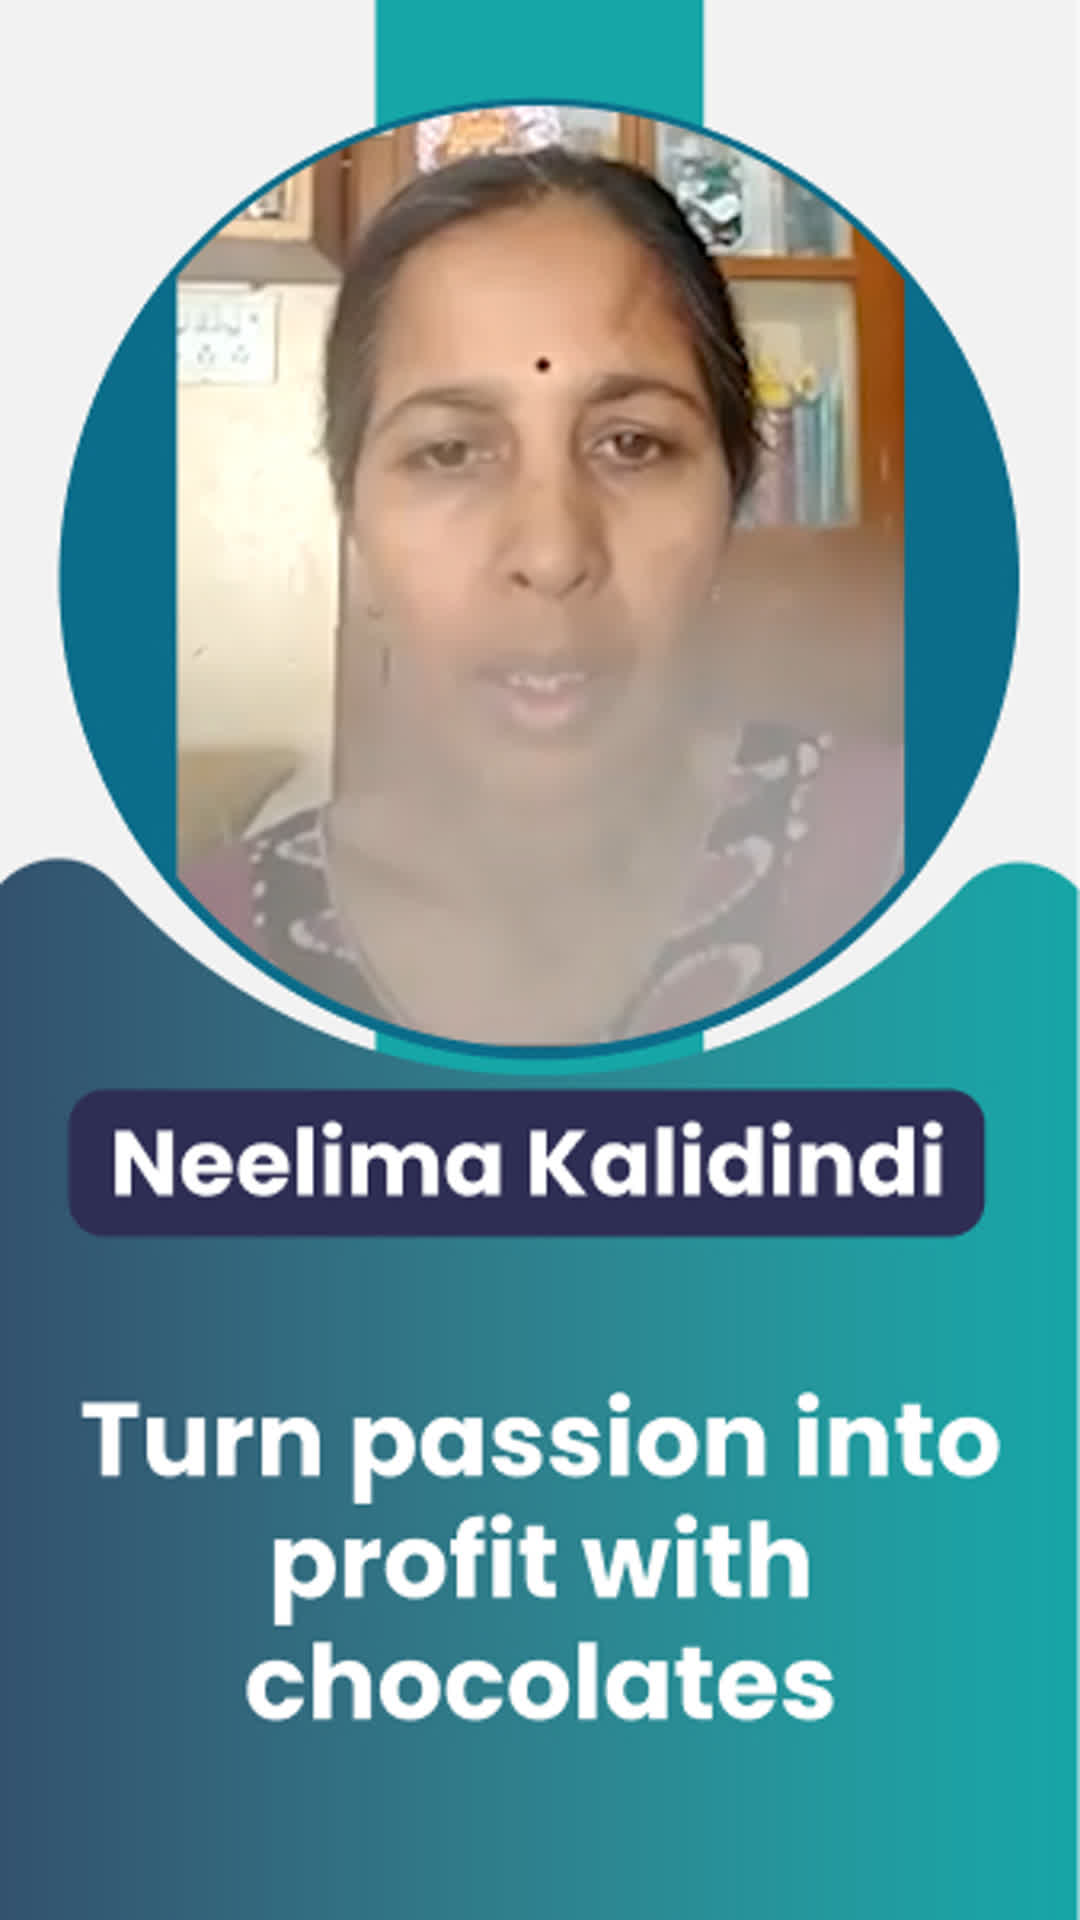 Neelima's Honest Review of ffreedom app - Hyderabad ,Telangana